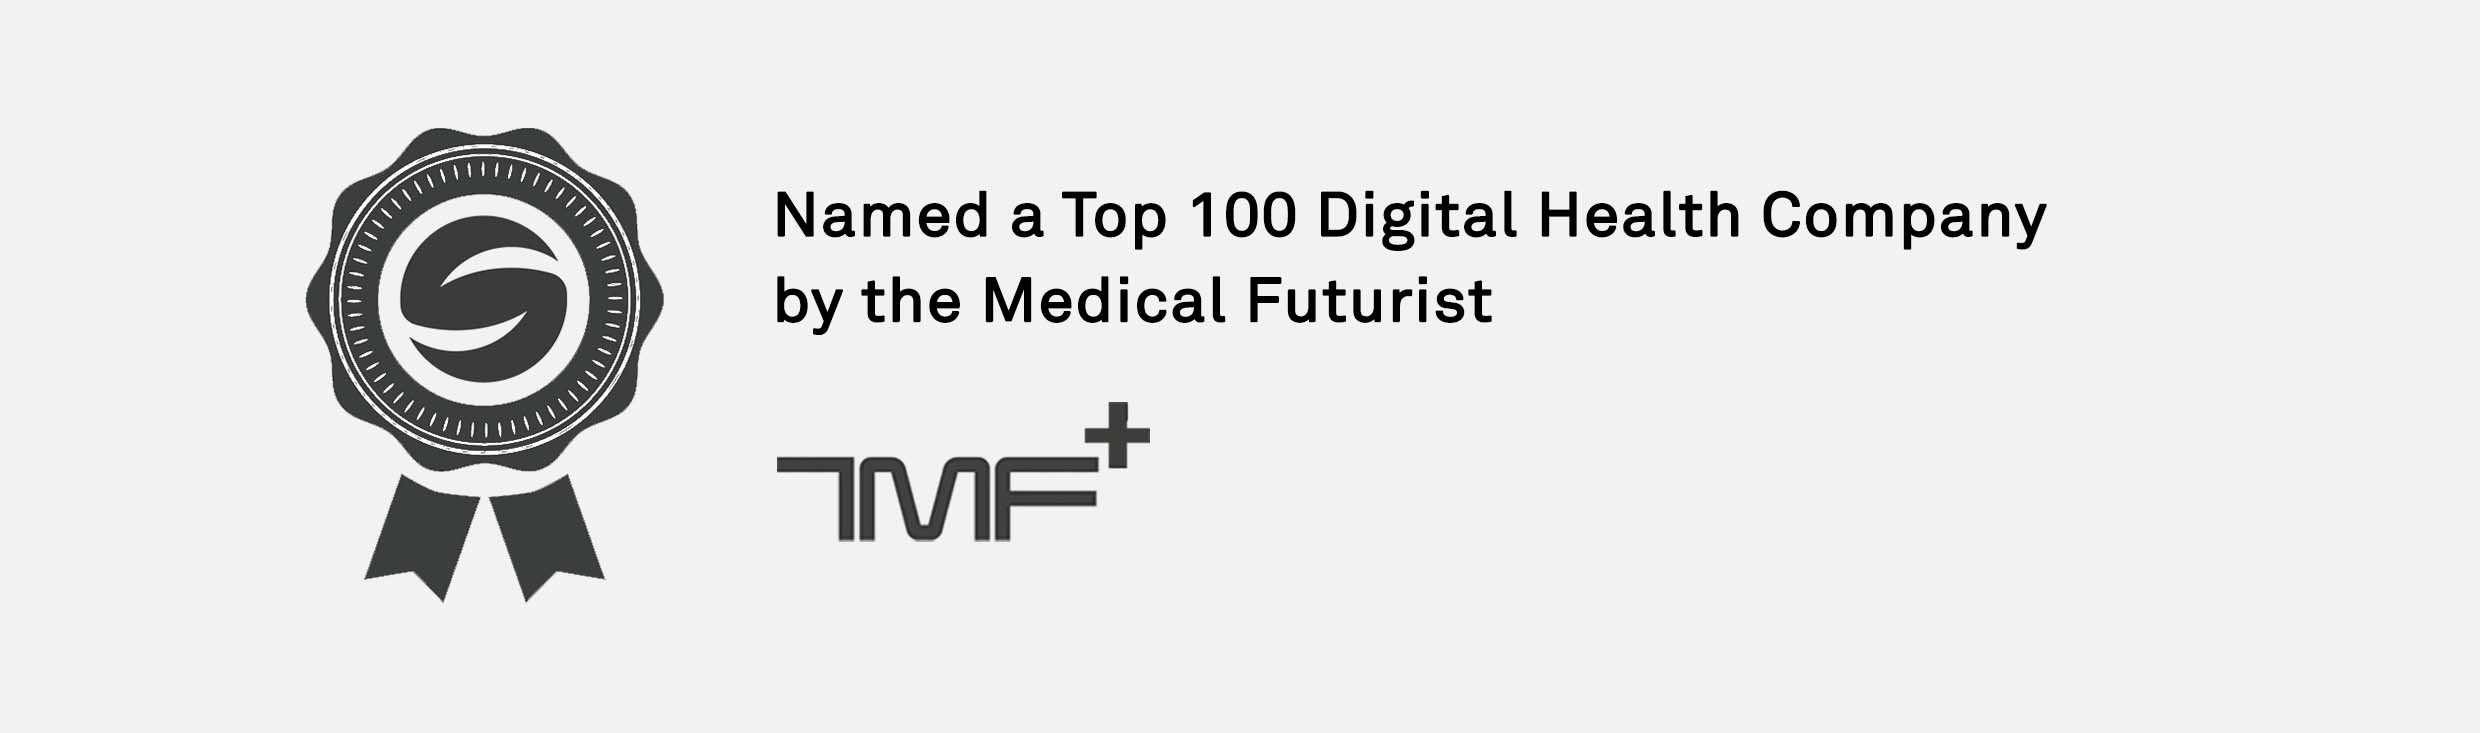 Top 100 Digital Health Company